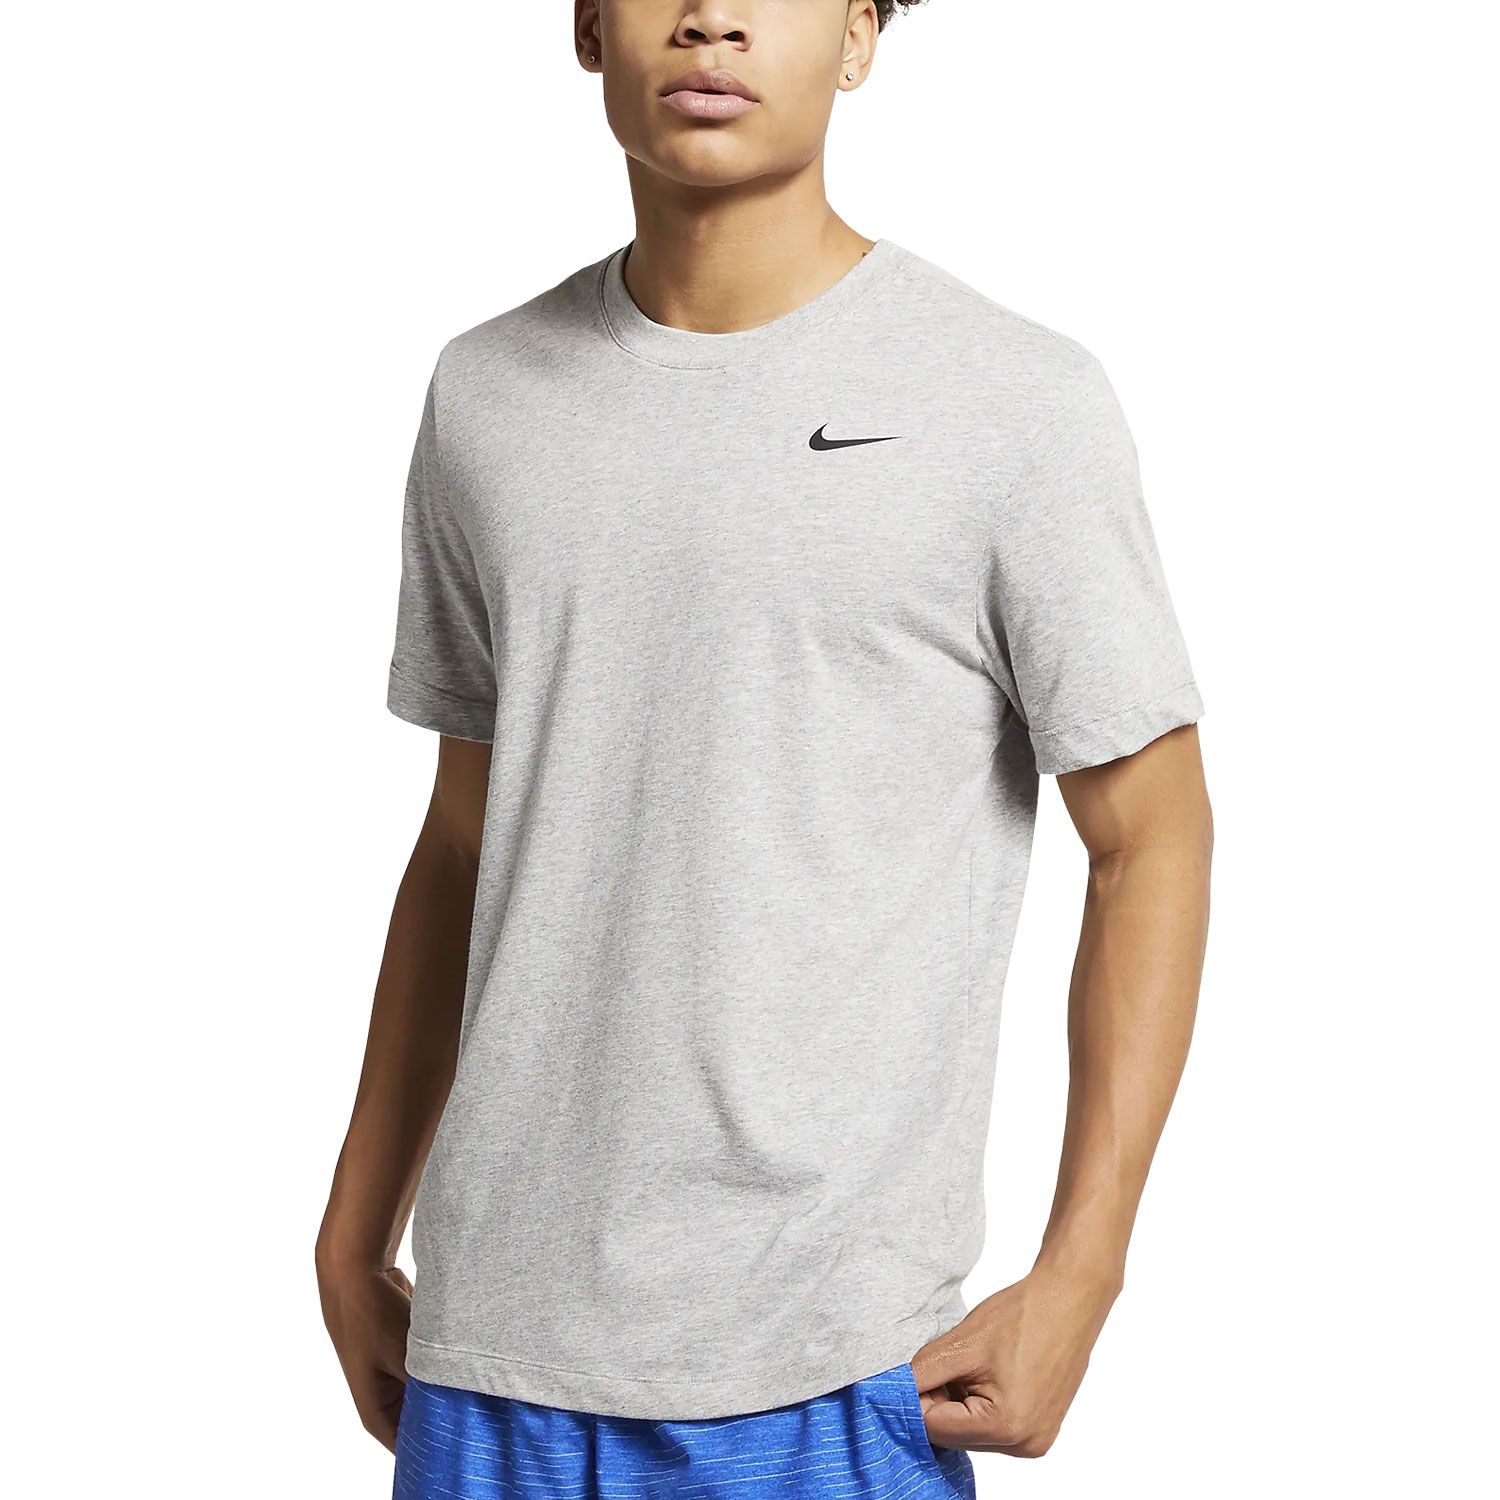 Nike Dry Men's T-Shirt